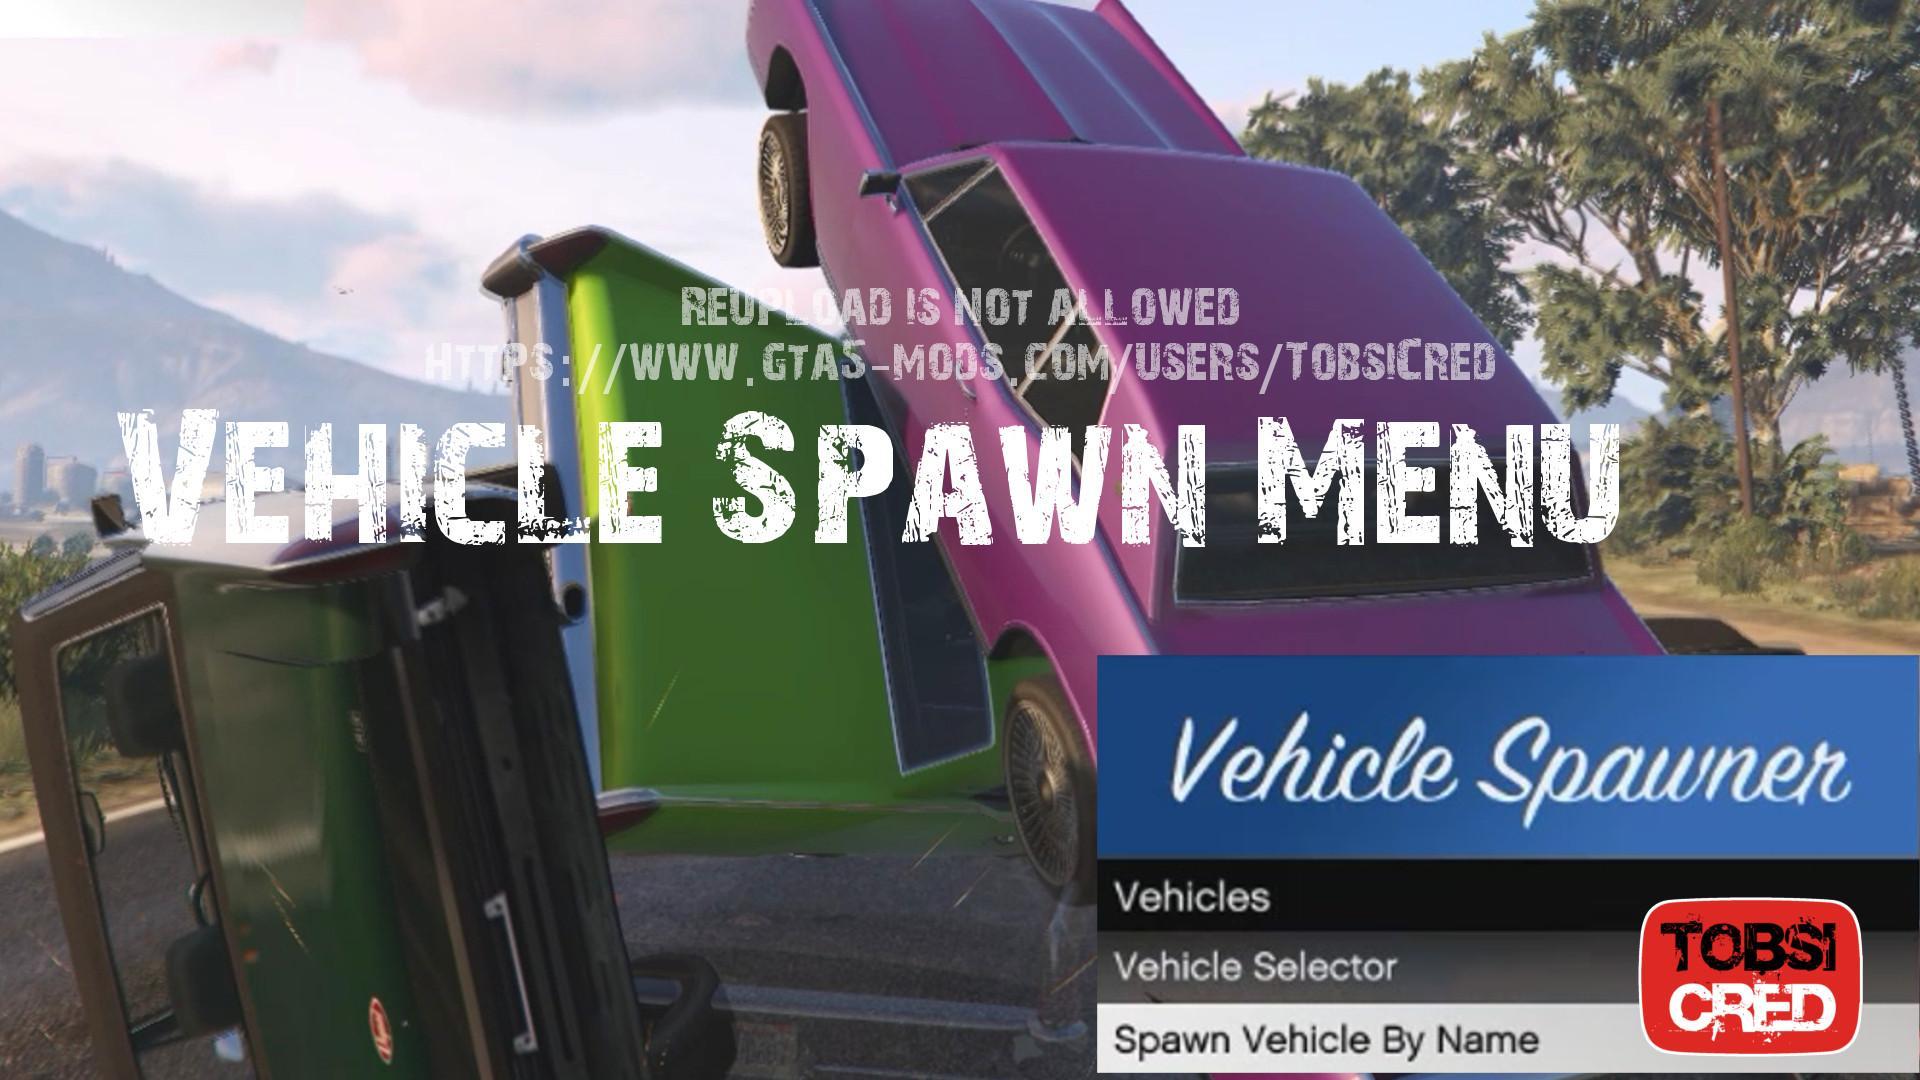 Vehicle Spawn Menu